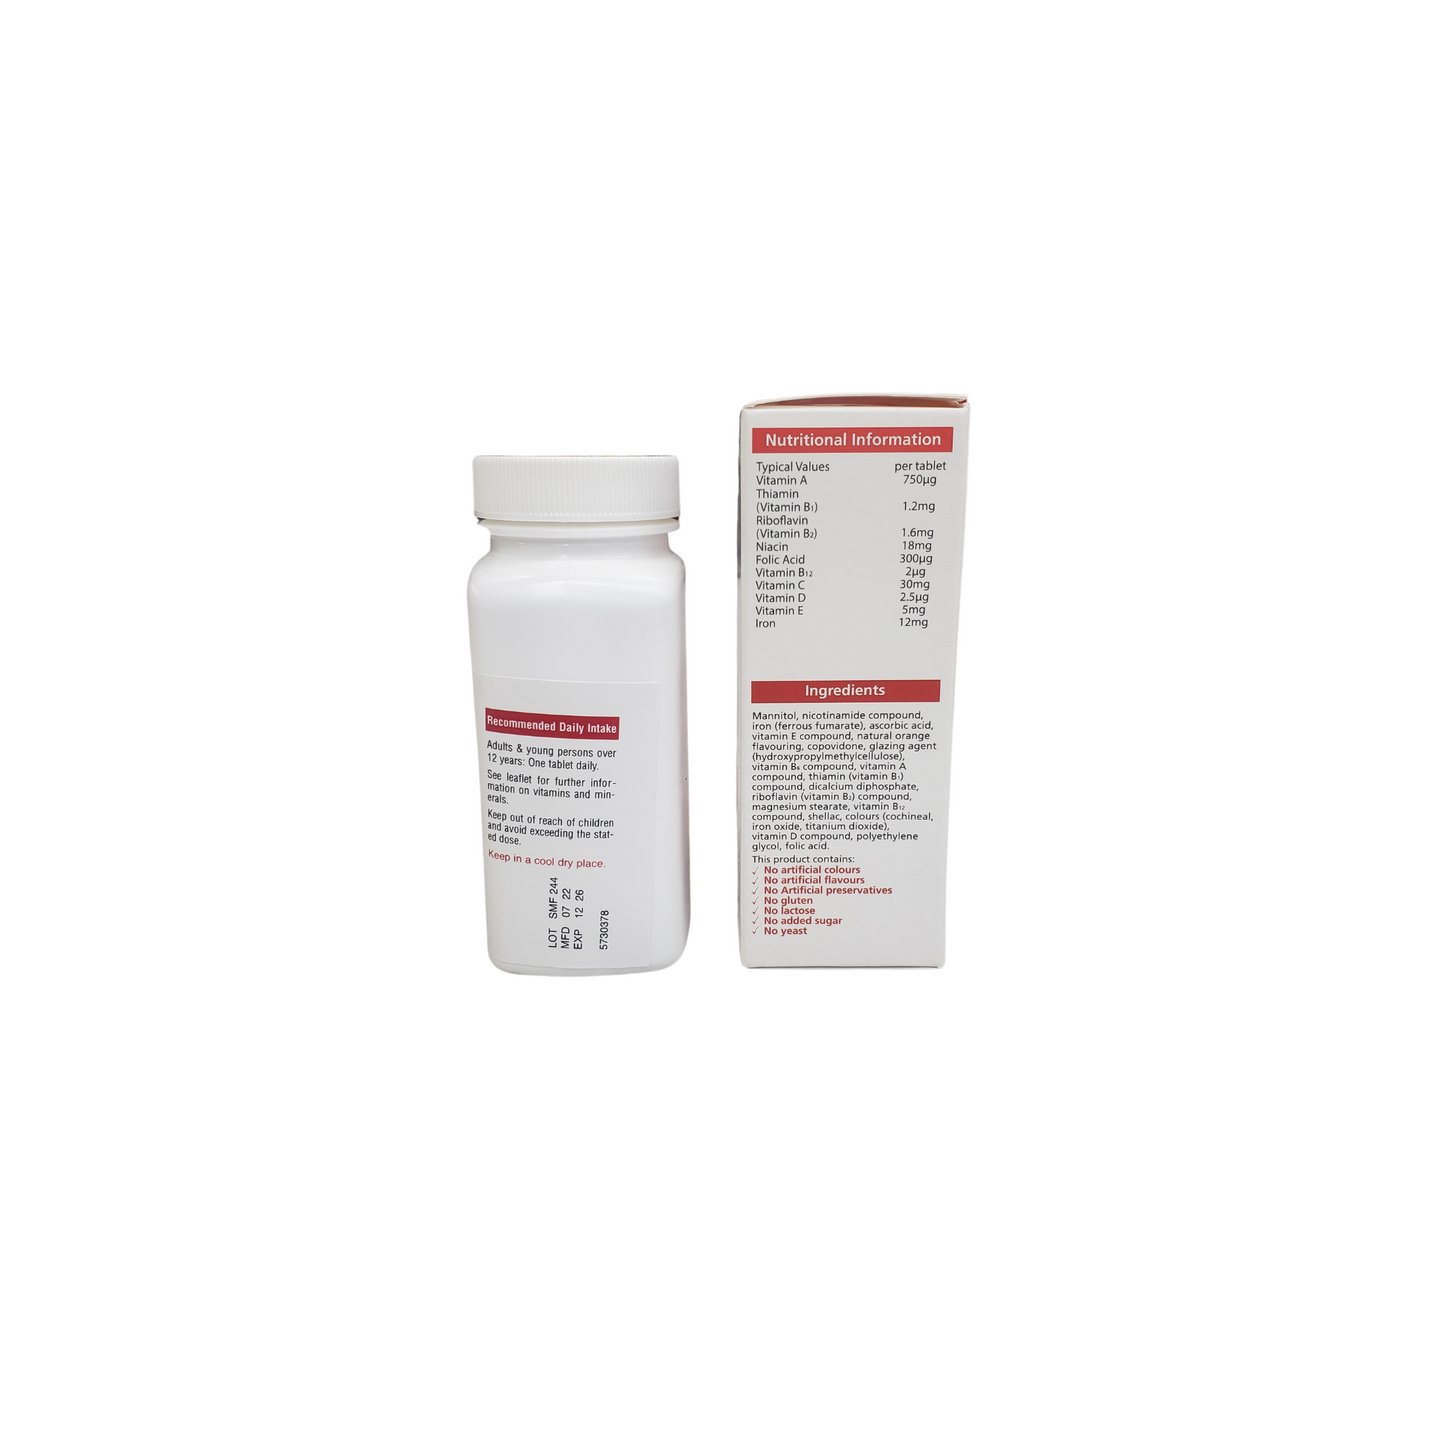 Sanatogen Multi Vitamins & Iron - 120 Tablets